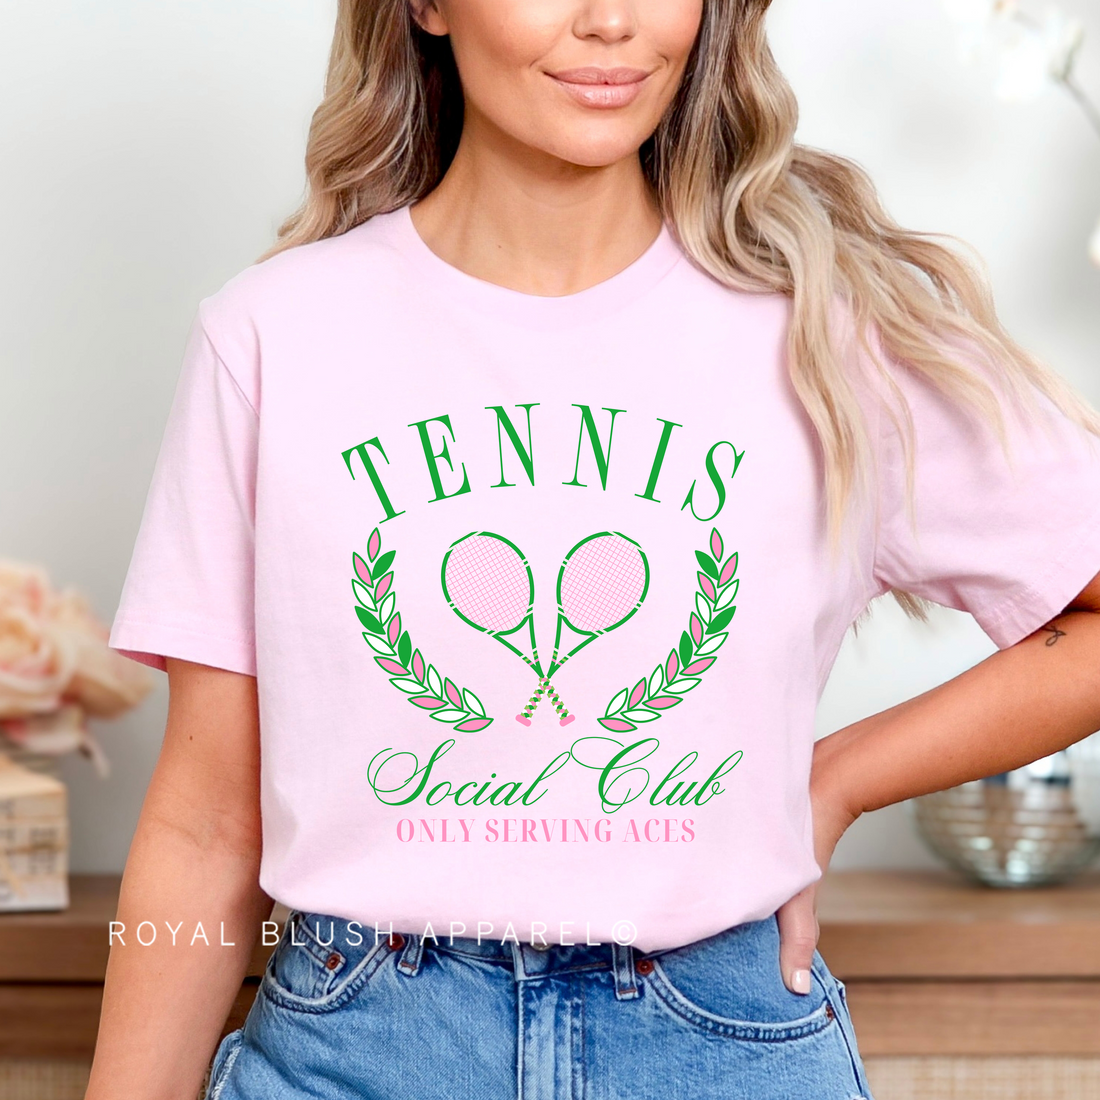 Tennis Social Club Full Colour Transfer